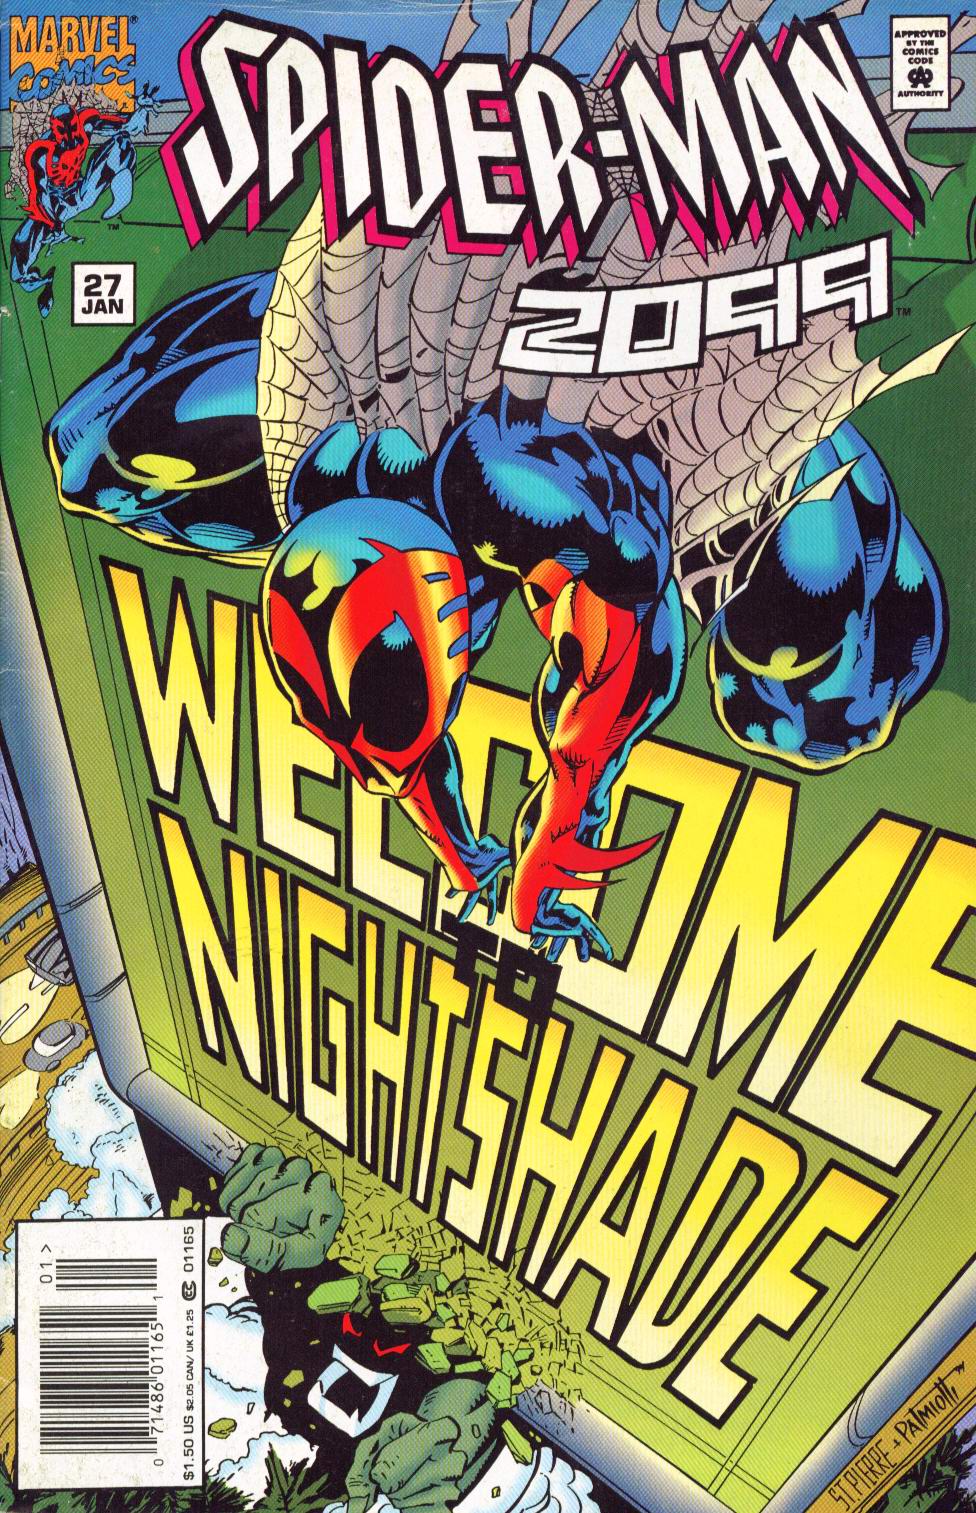 Spider-Man 2099 (1992) issue 27 - Page 1